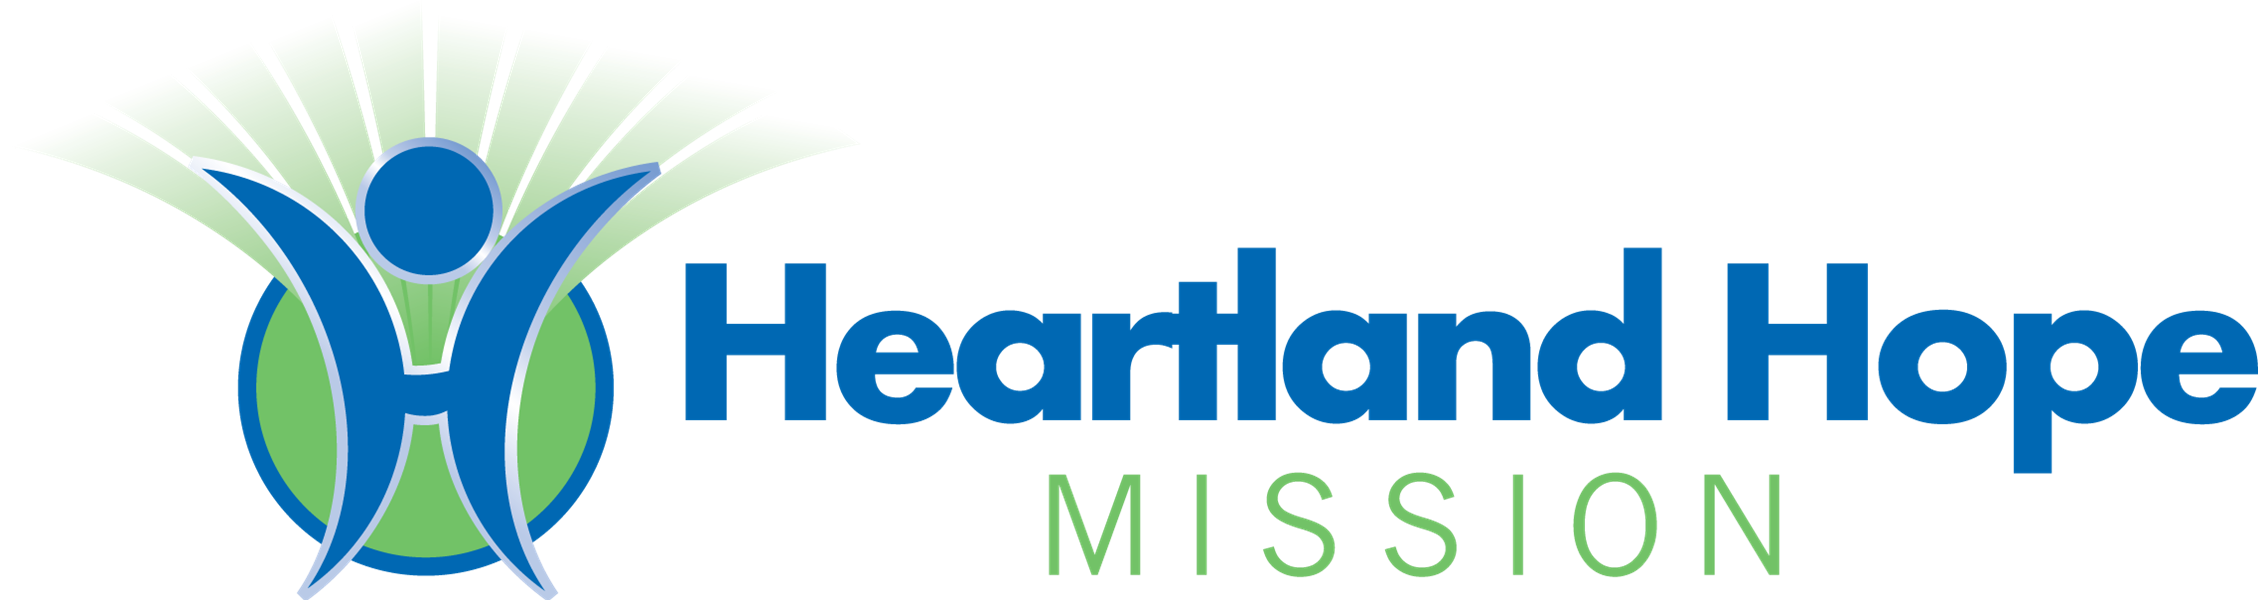 Heartland Hope Mission logo